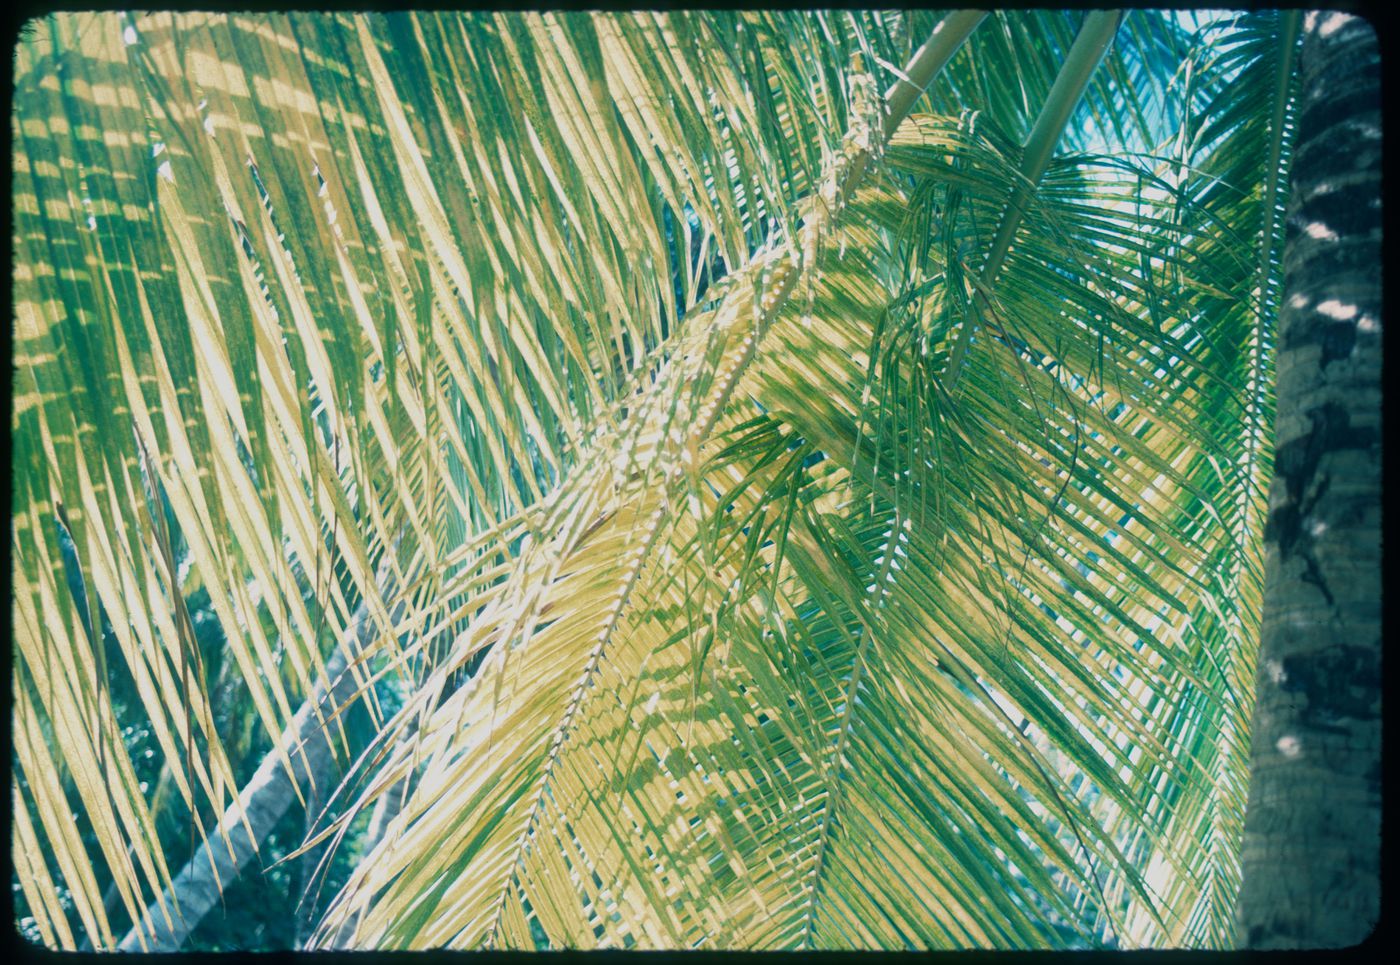 Palm trees, Jamaica